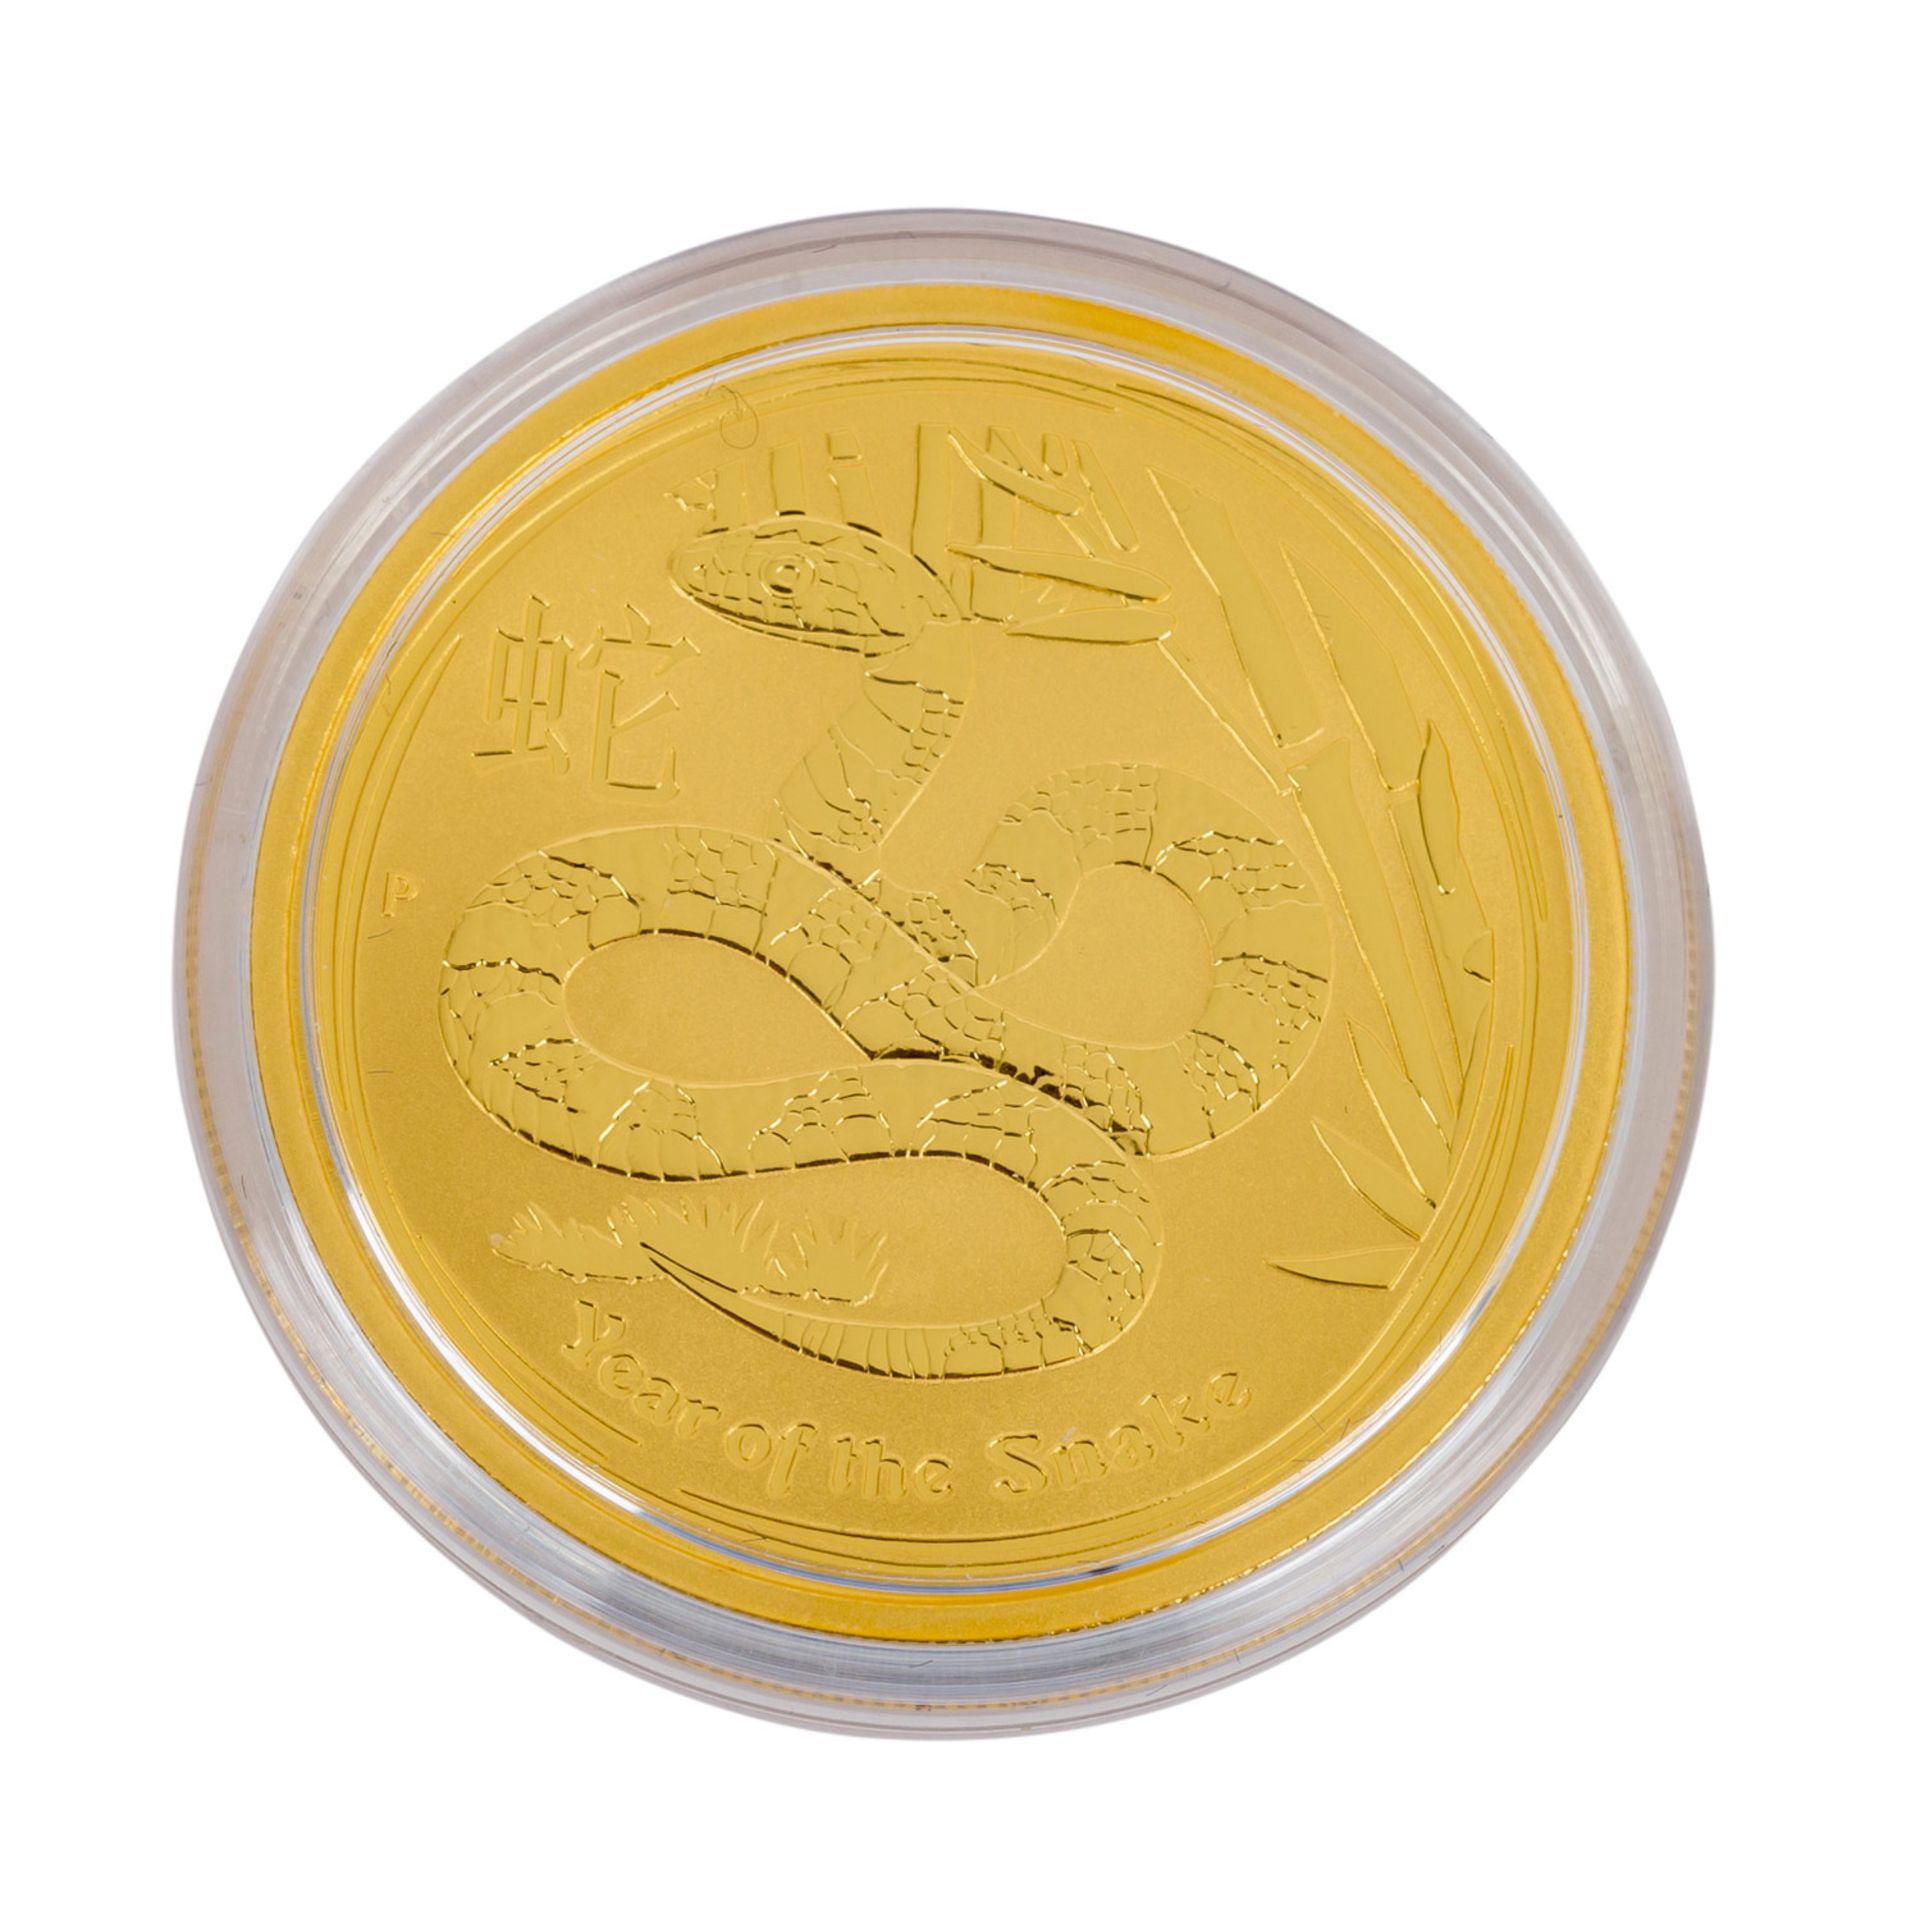 Australien/Gold - 100 Dollars 2013, Lunar II,Year of the Snake, stgl, minimalste Kratz